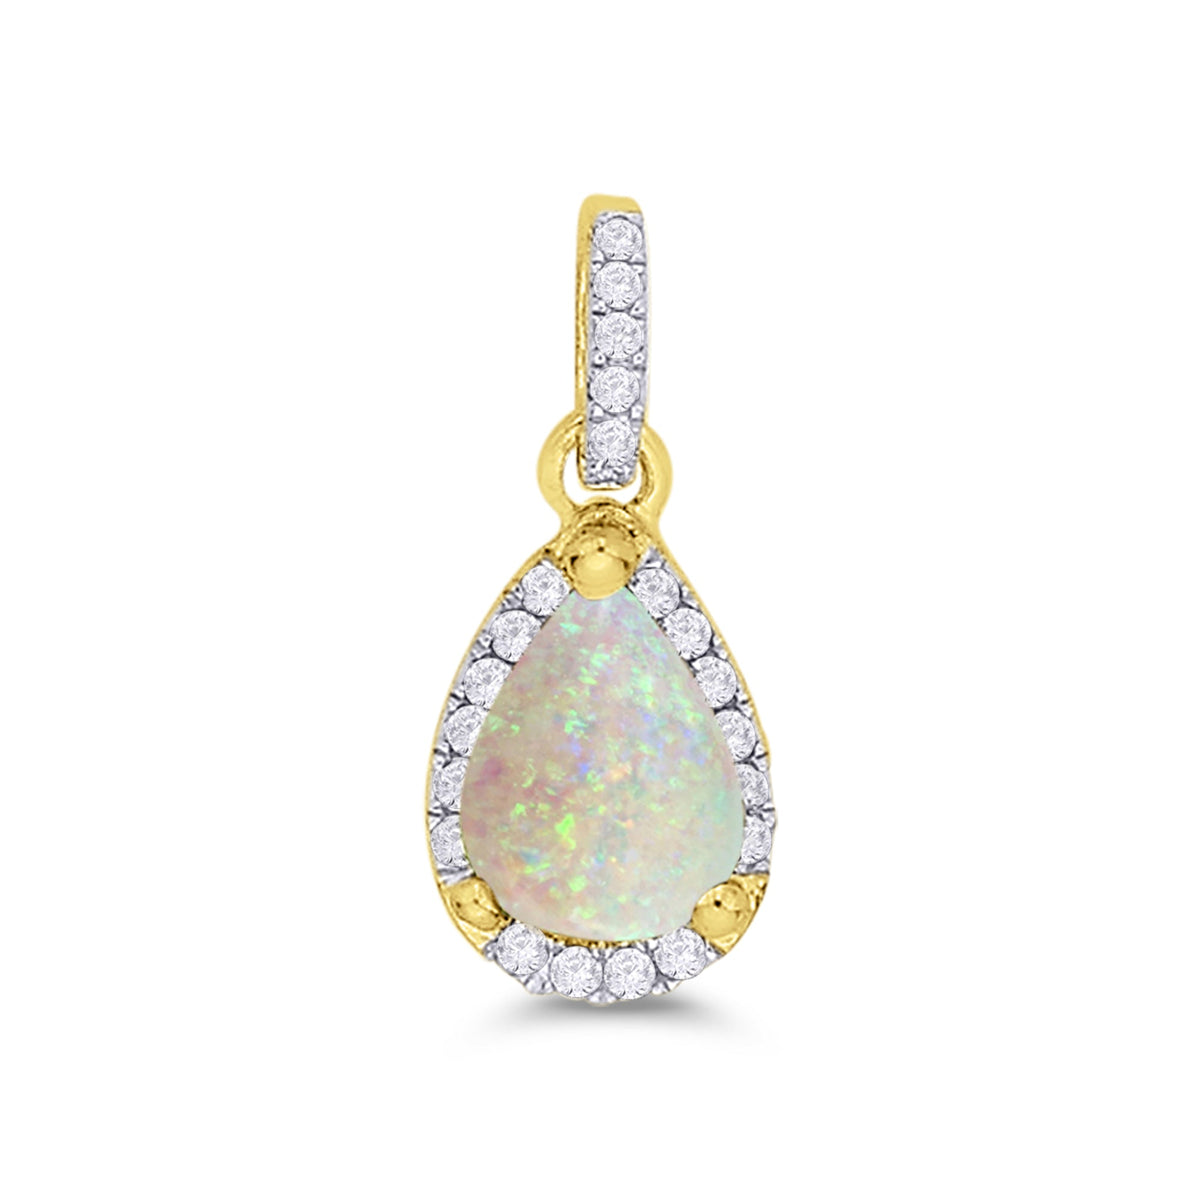 9ct gold 7x5mm pear shape opal &amp; diamond cluster pendant with diamond set bale 0.13ct